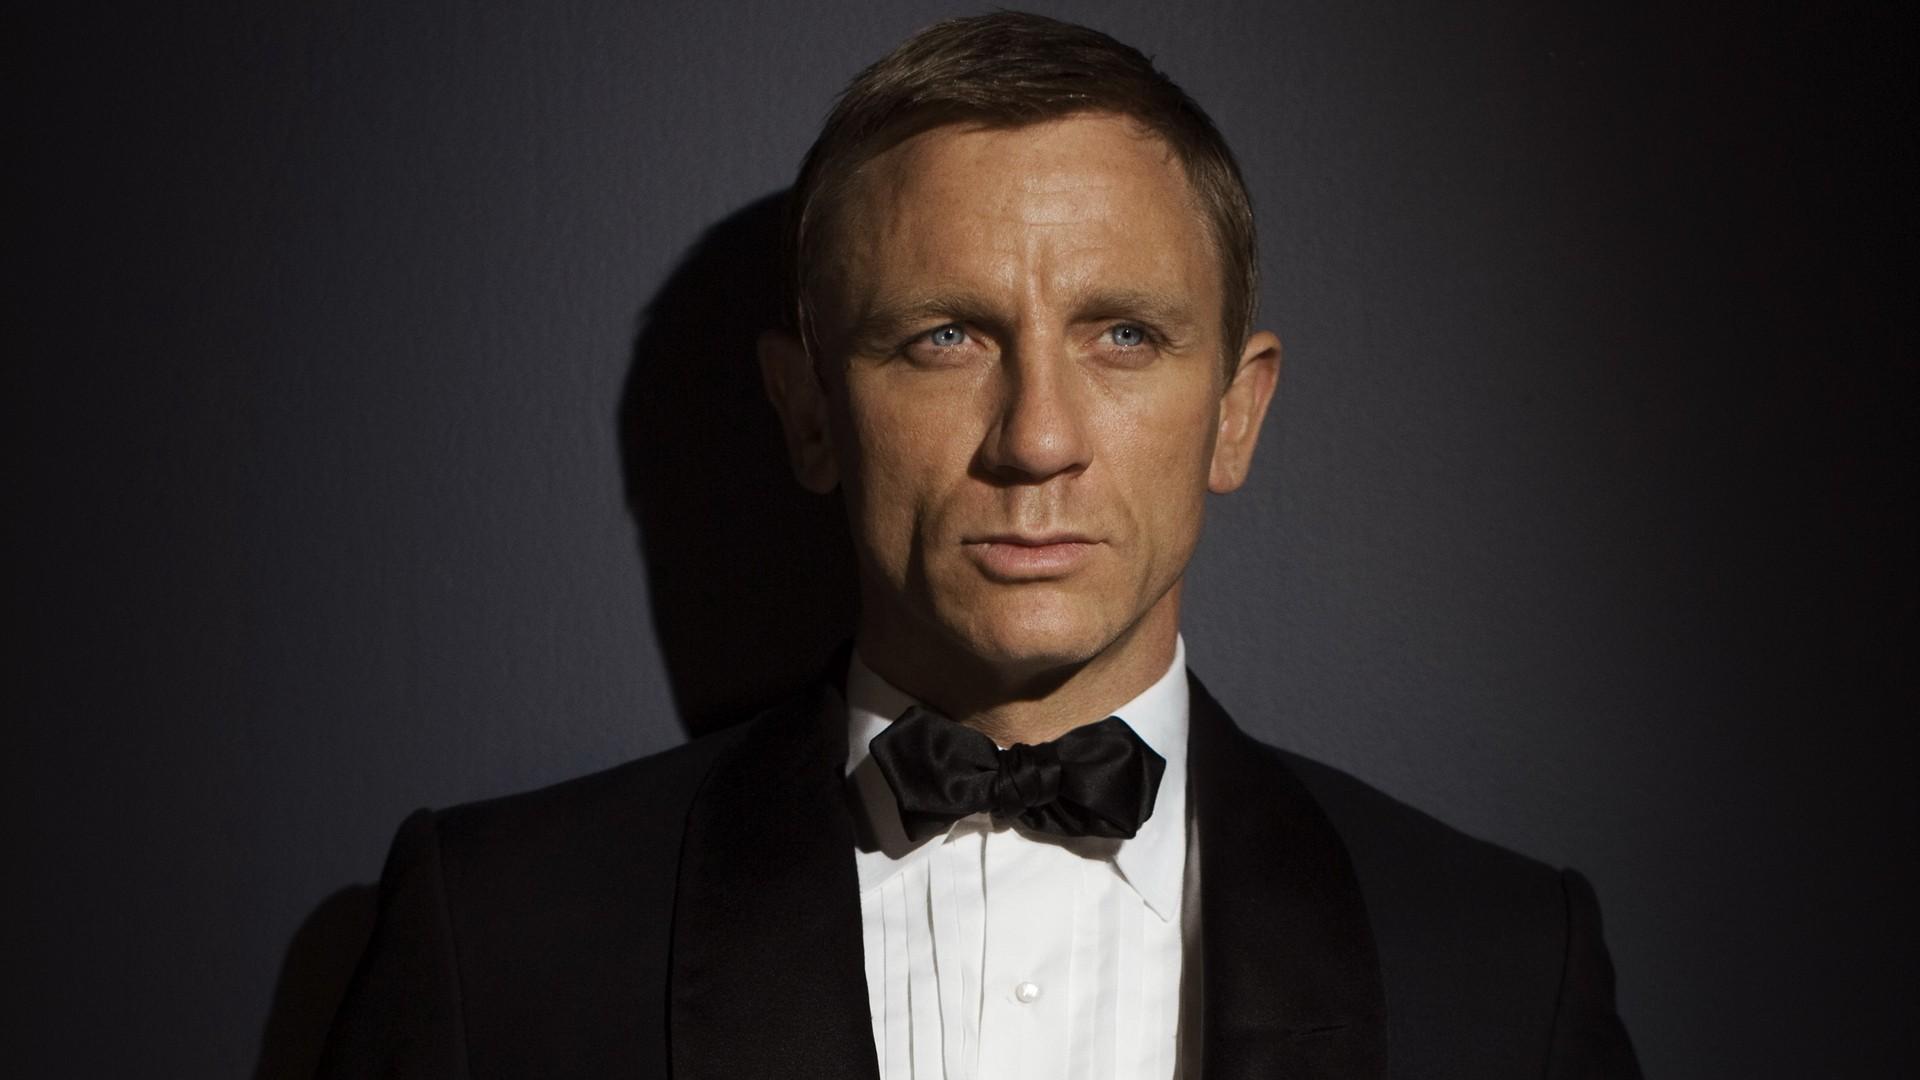 James Bond Daniel Craig Tuxedo HD Wallpaper, Background Image